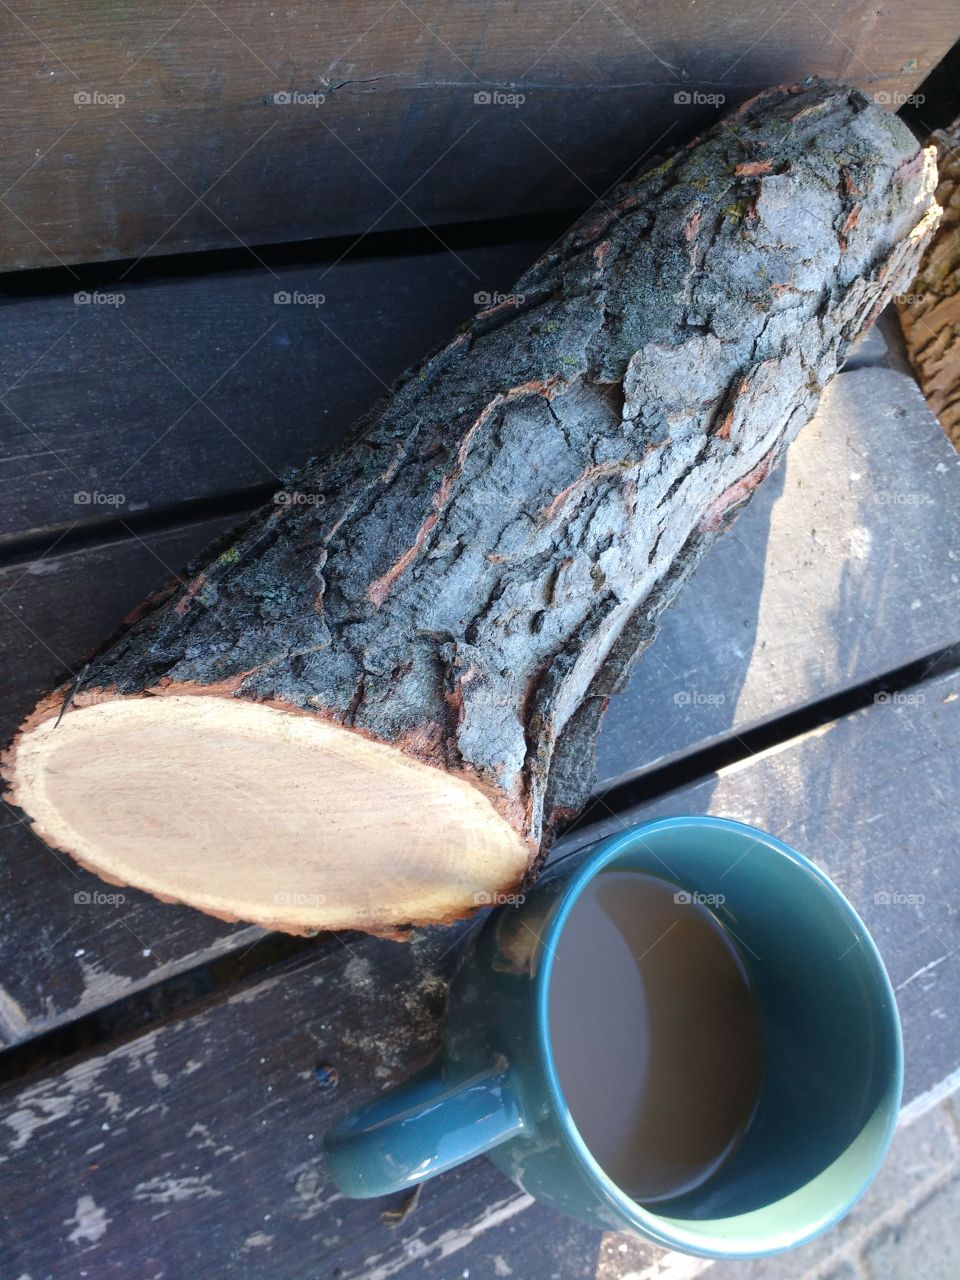 Cup of Coffee with Kentucky Coffee Tree wood